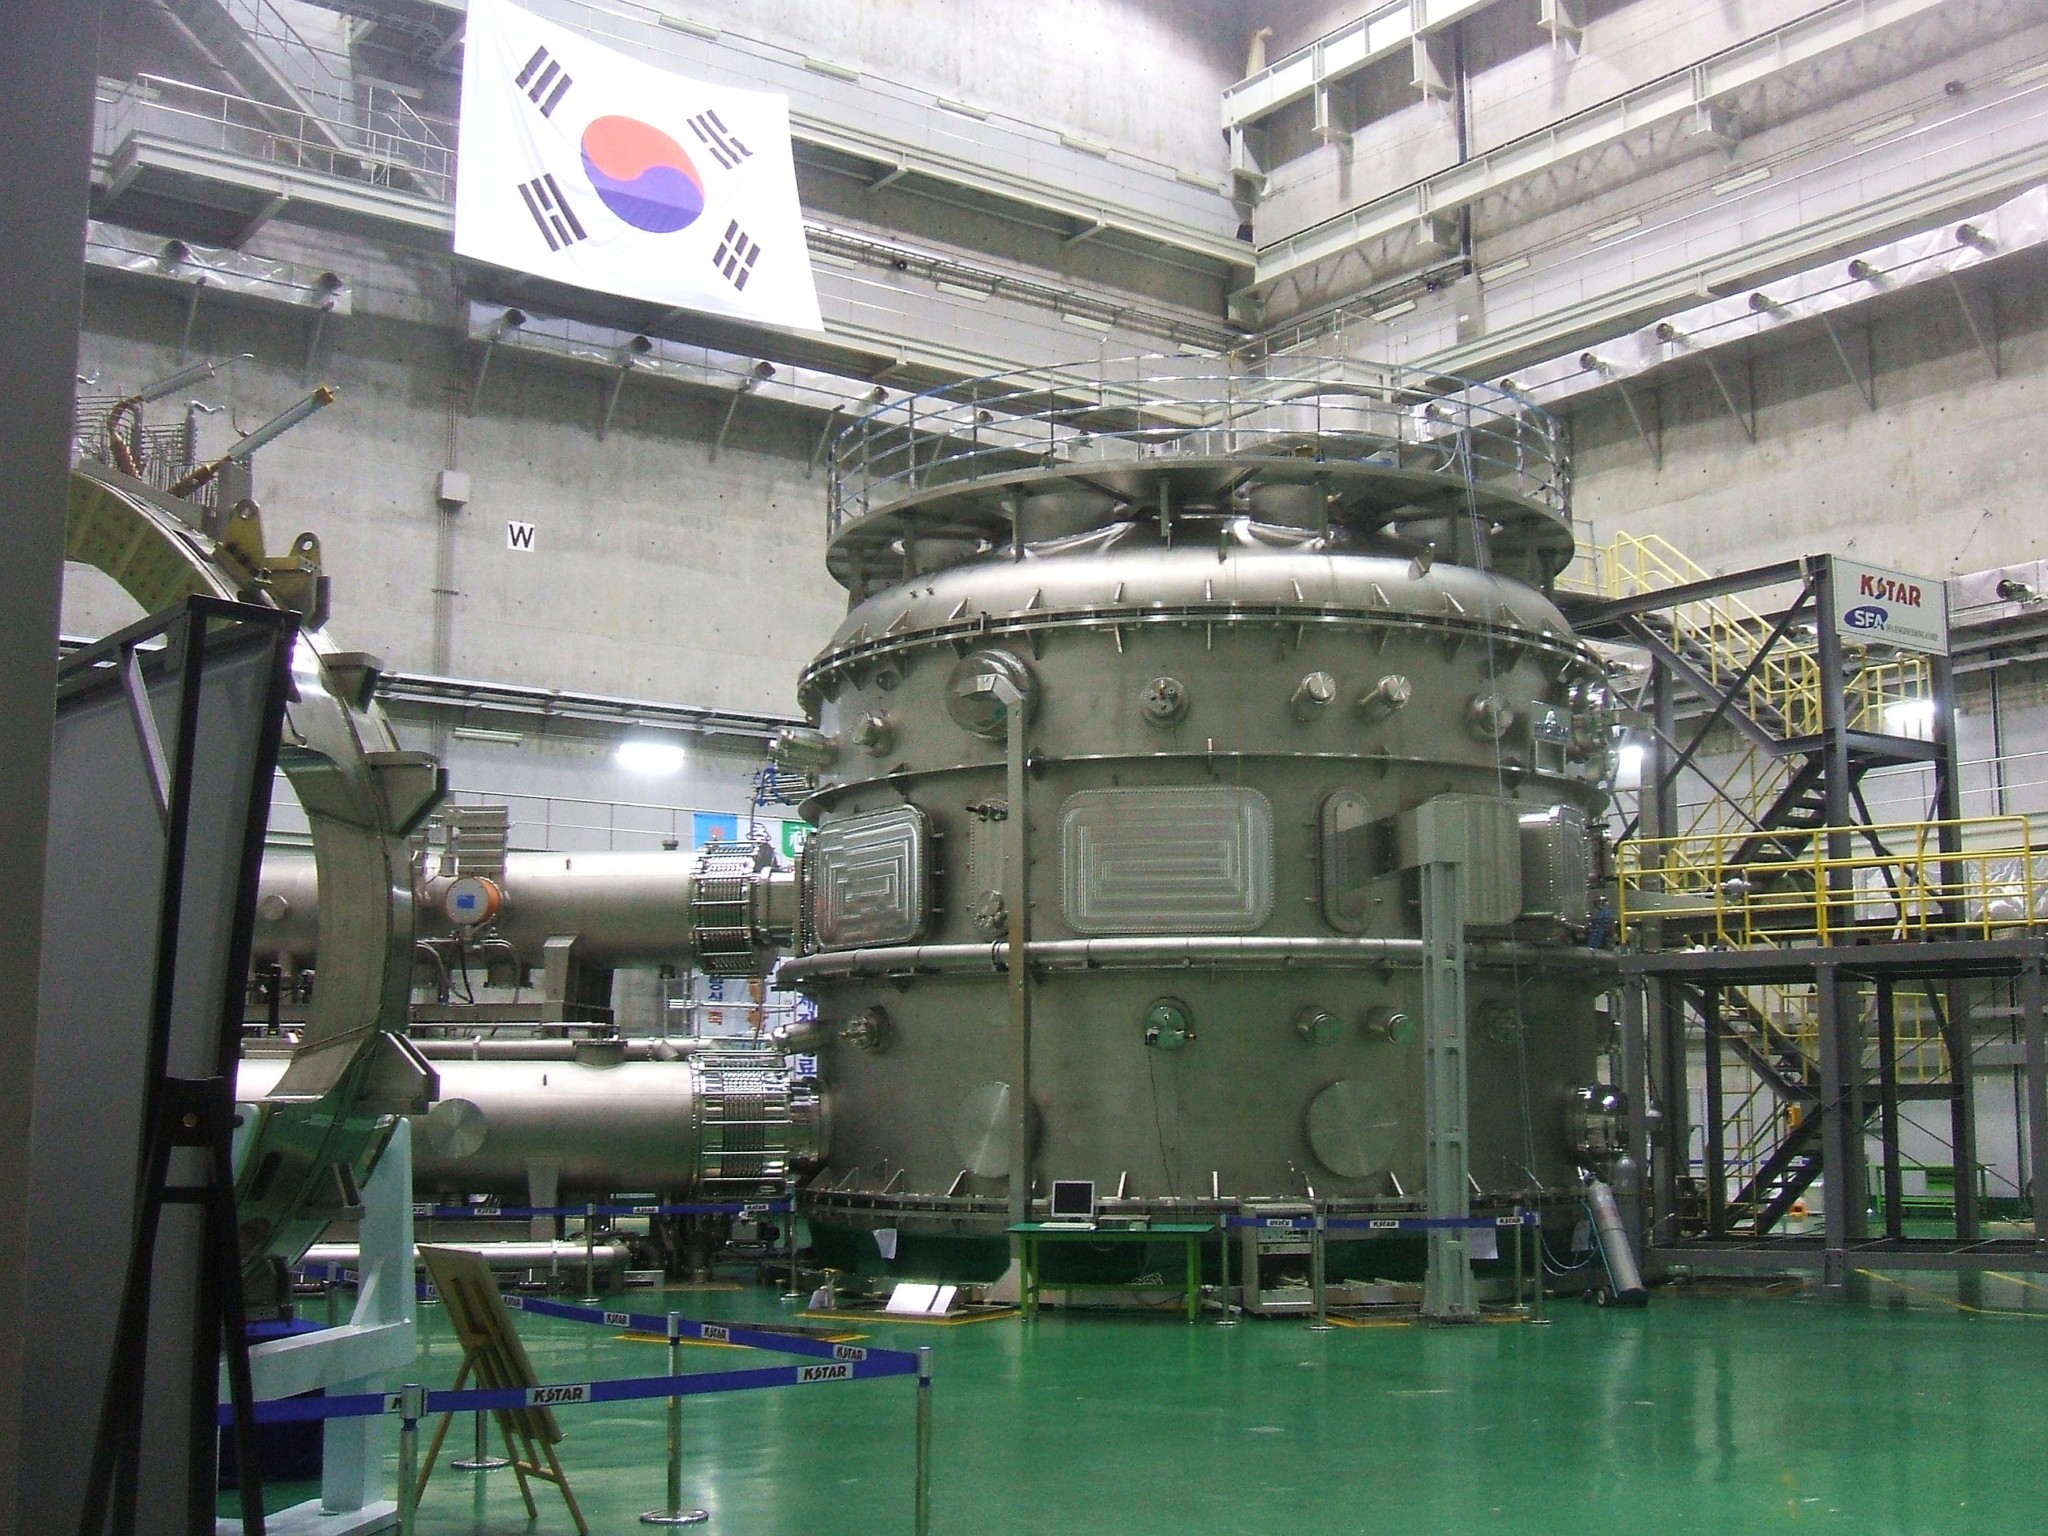 fusion nucleaire tokamak sud coreen kstar record - L'Energeek